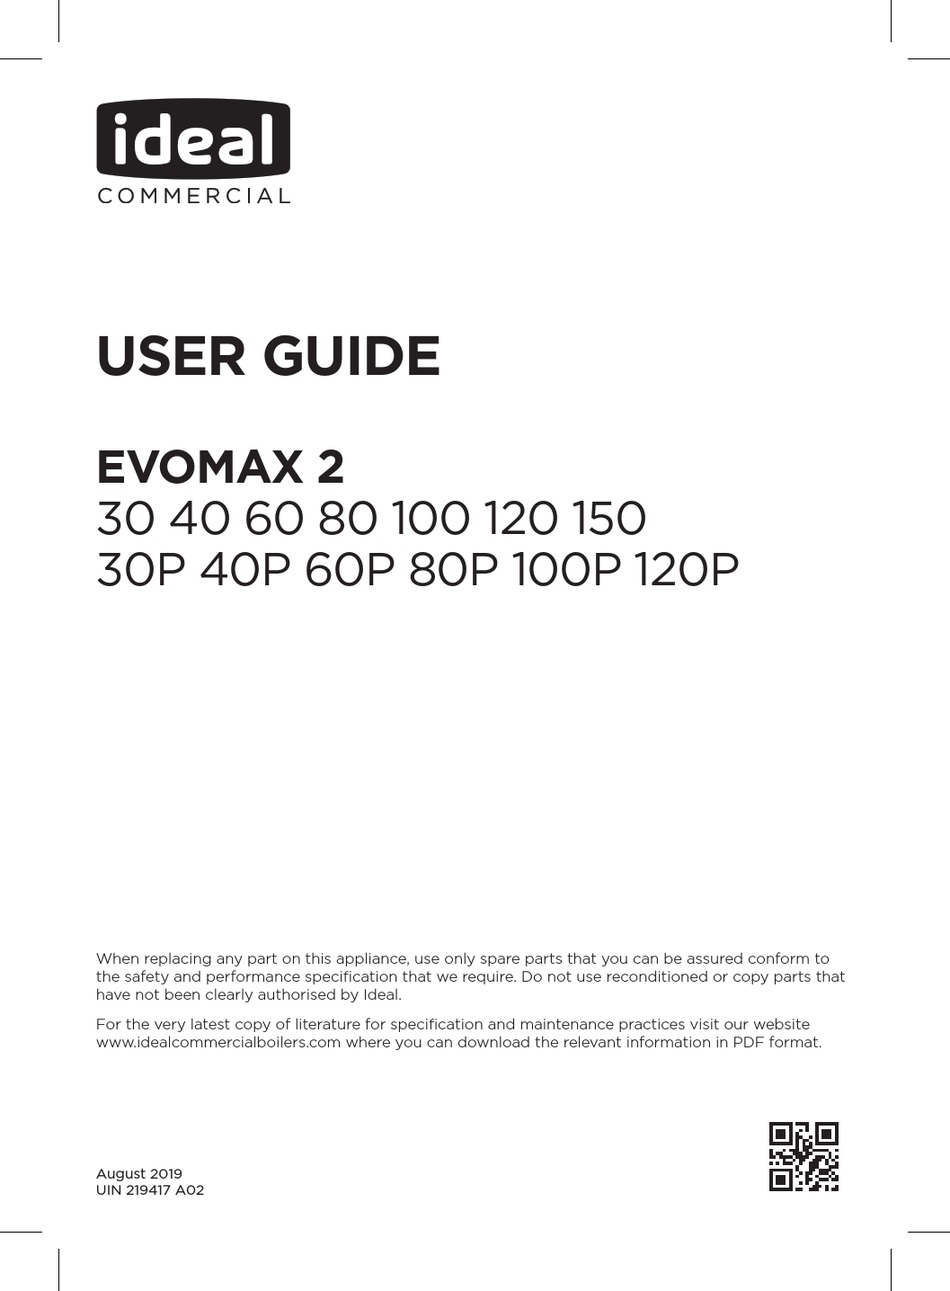 IDEAL EVOMAX 2 SERIES USER MANUAL Pdf Download | ManualsLib  Ideal Evomax 2 Wiring Diagram    ManualsLib